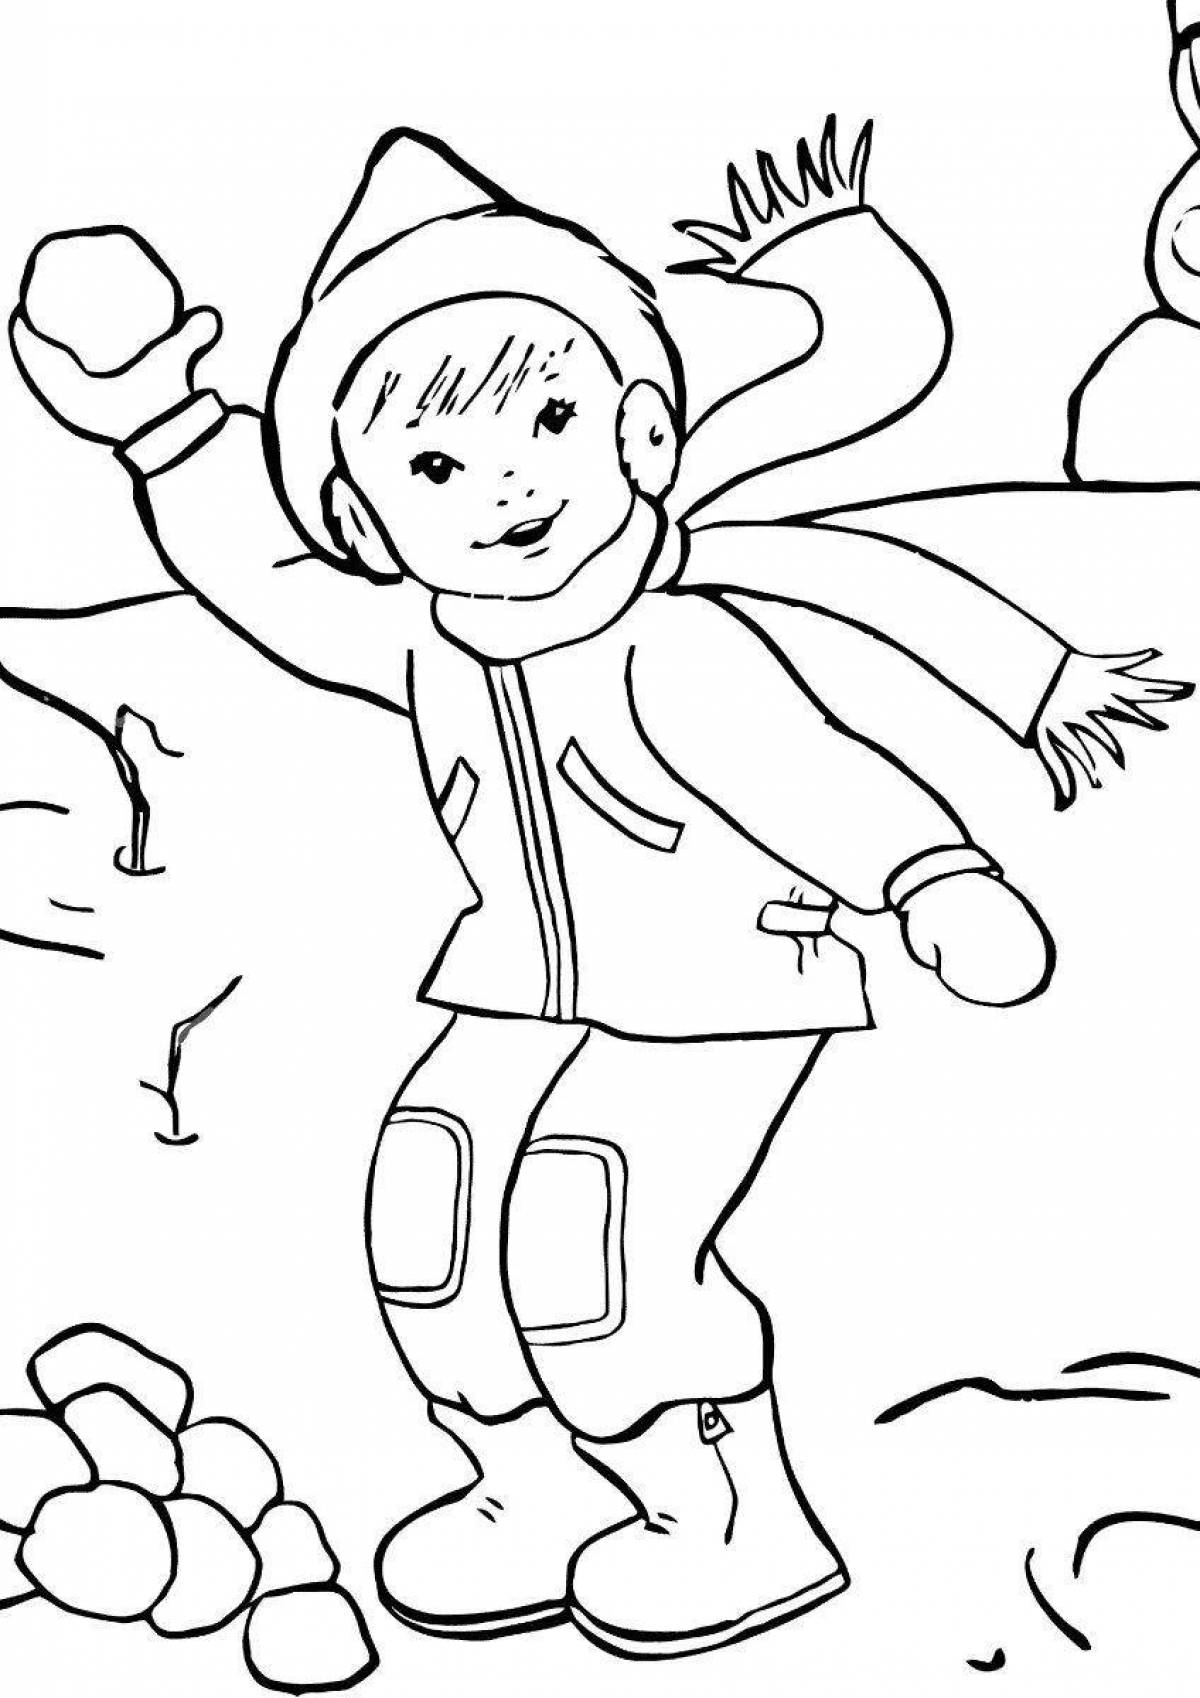 Fun coloring boy in winter clothes